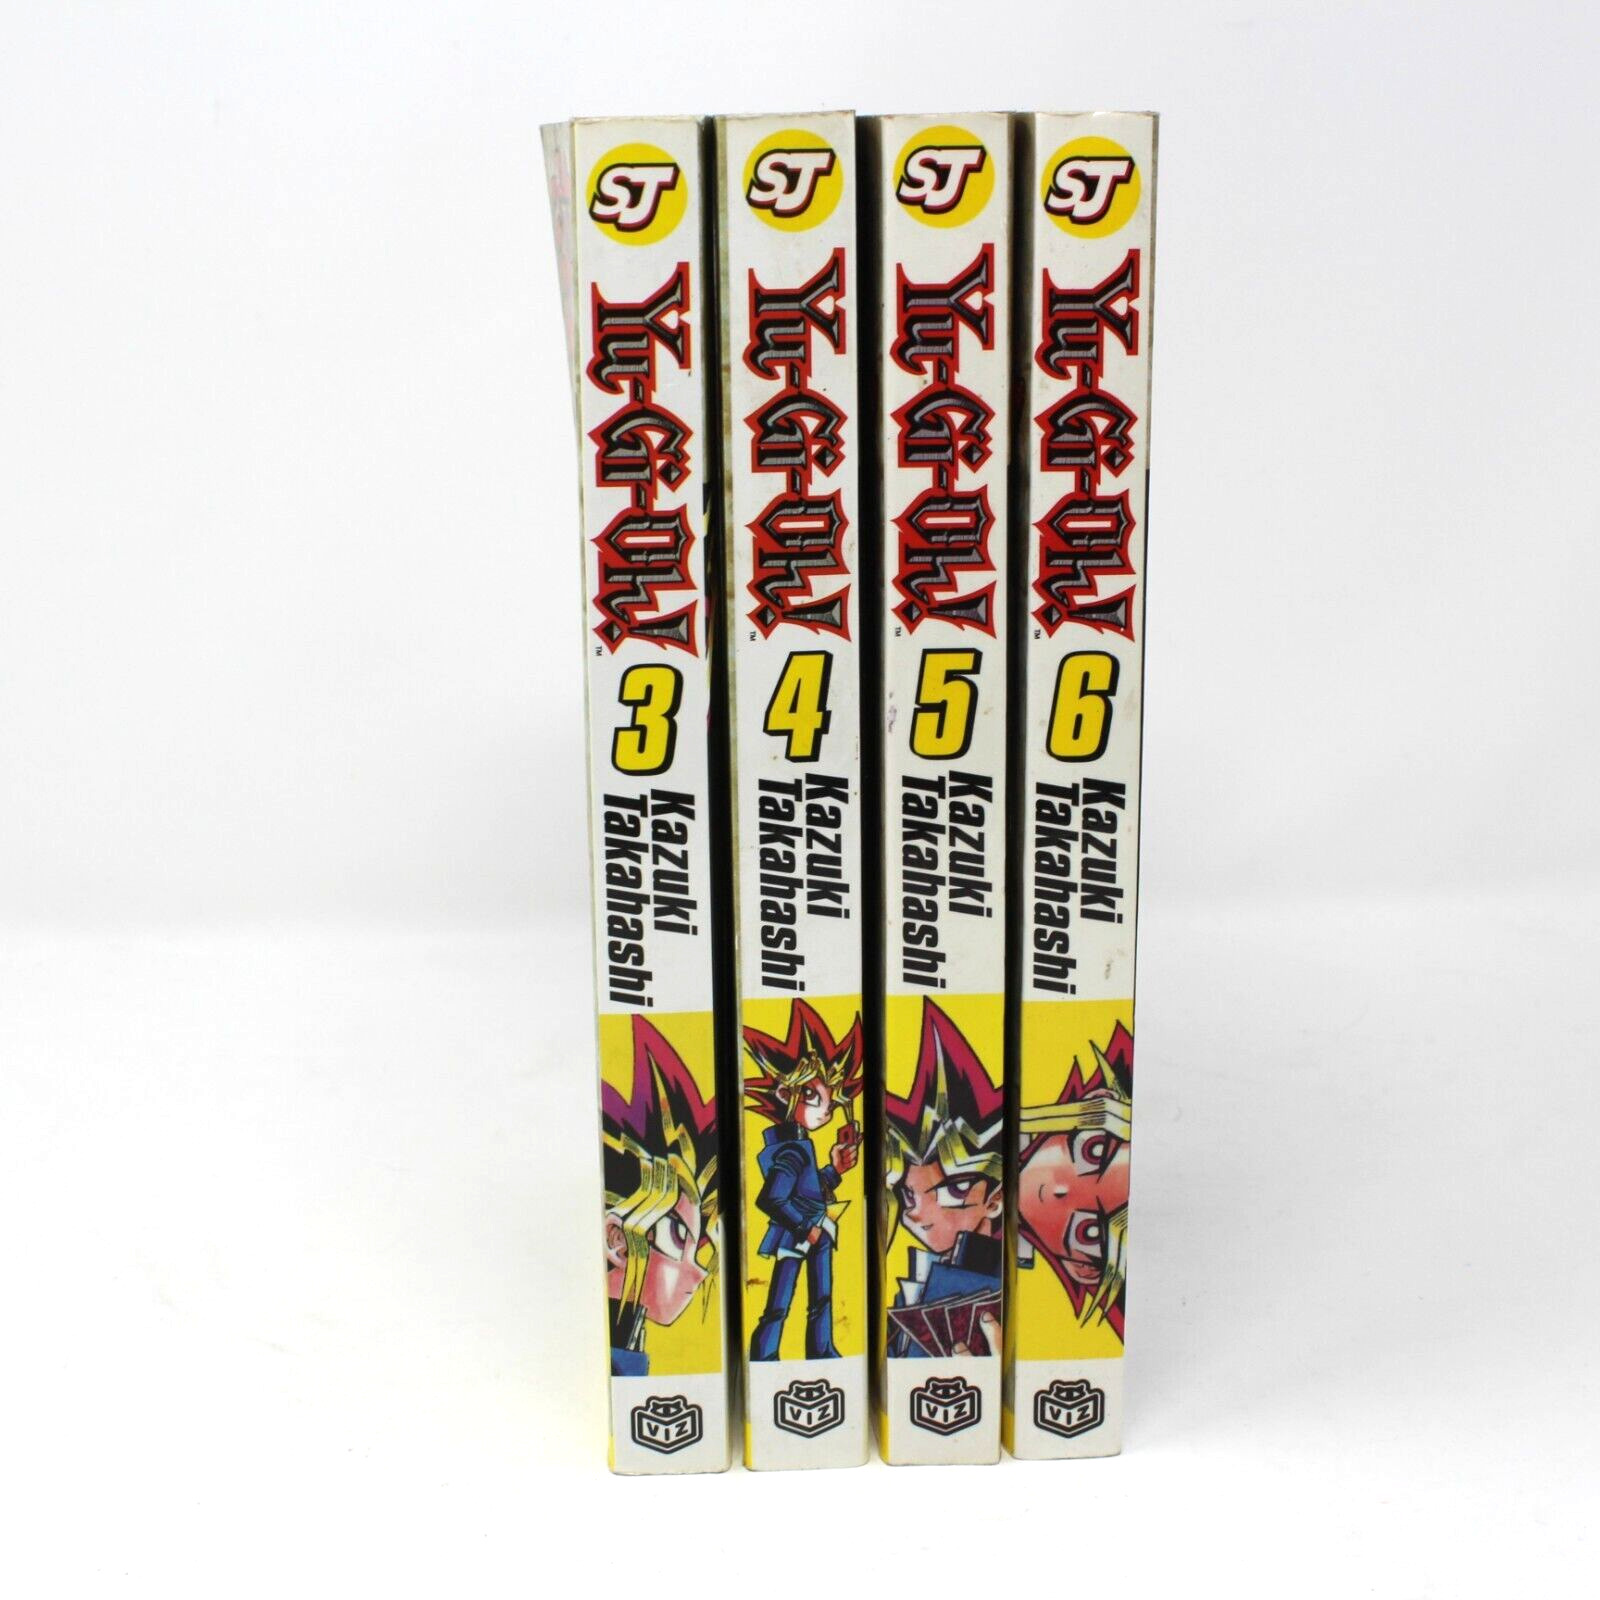 YU-GI-OH Shonen Jump Manga Volume 3-6 Graphic Novel by Takahashi, Kazuki Nice